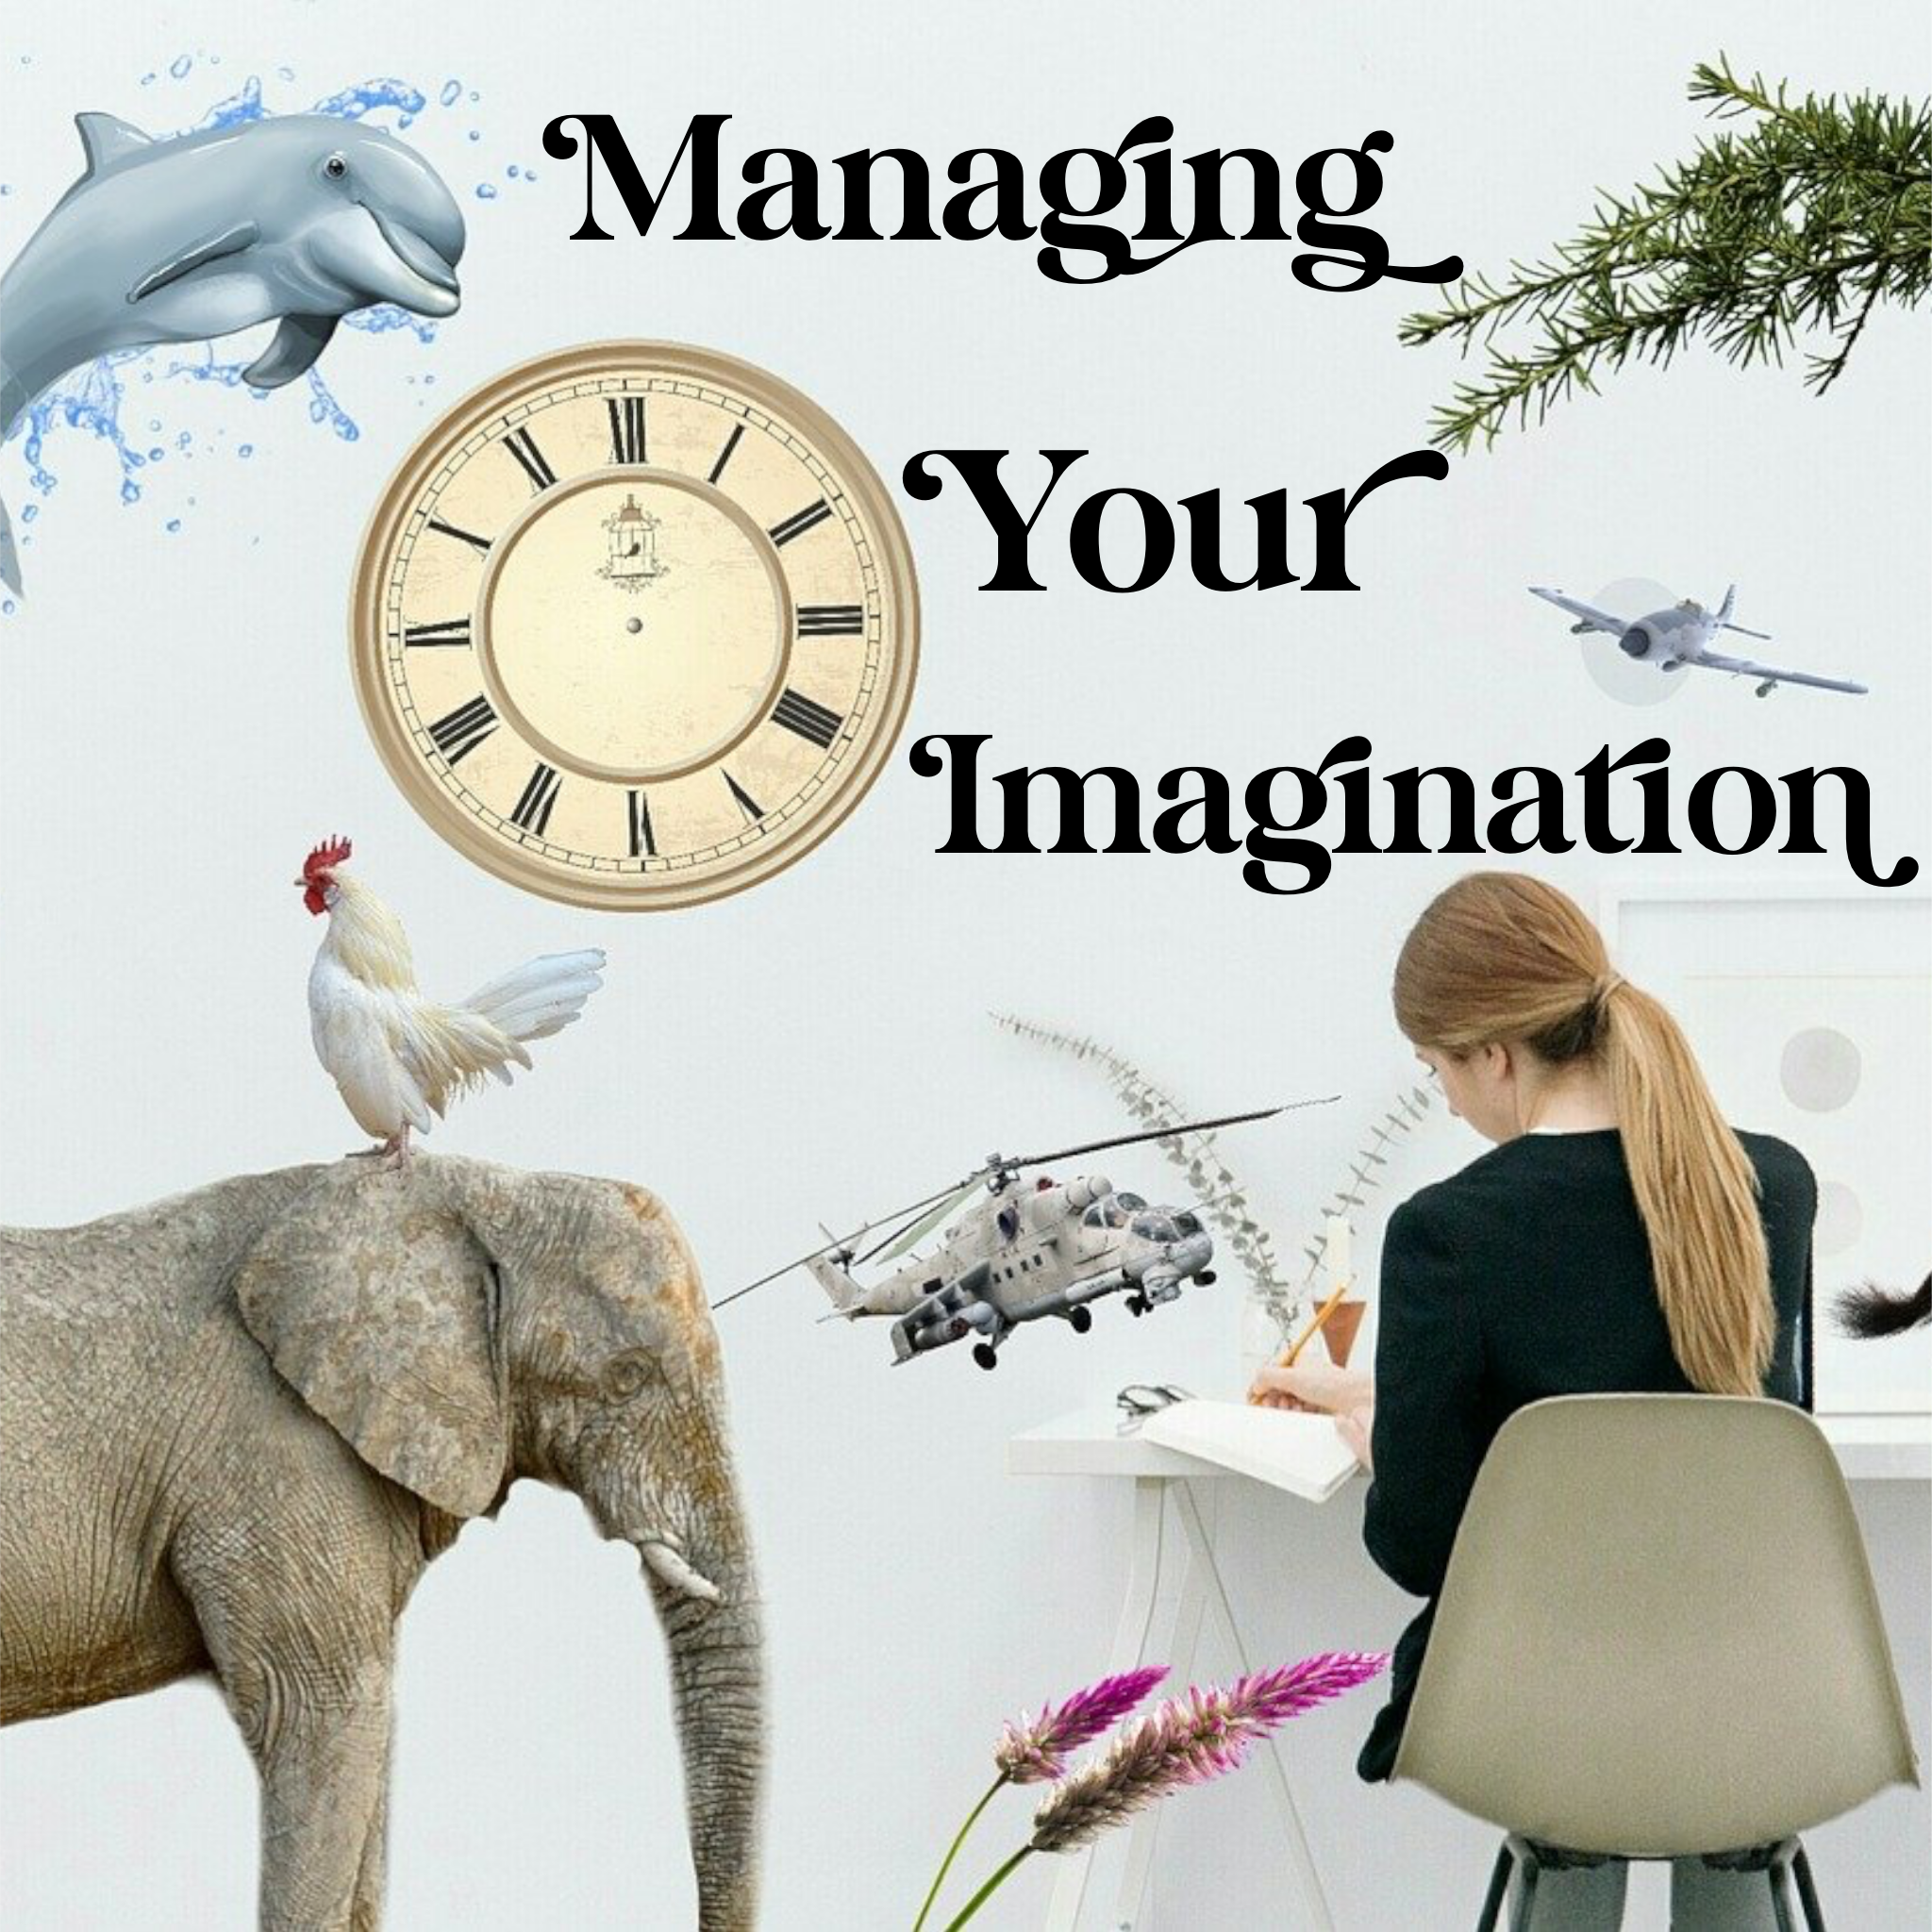 Managing Your Imagination - 1/23/22